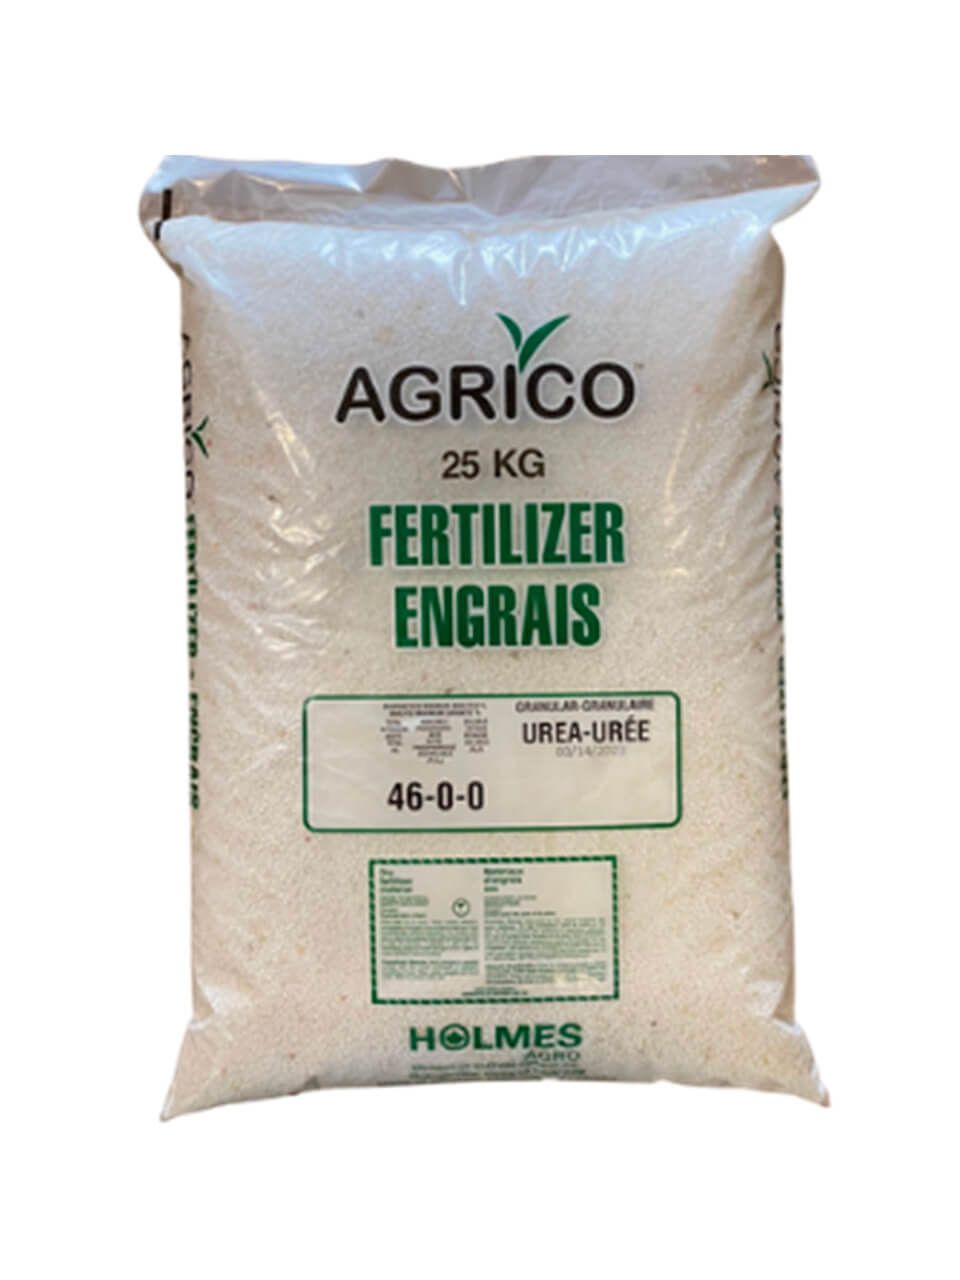 Agrico fertilizer 46-0-0